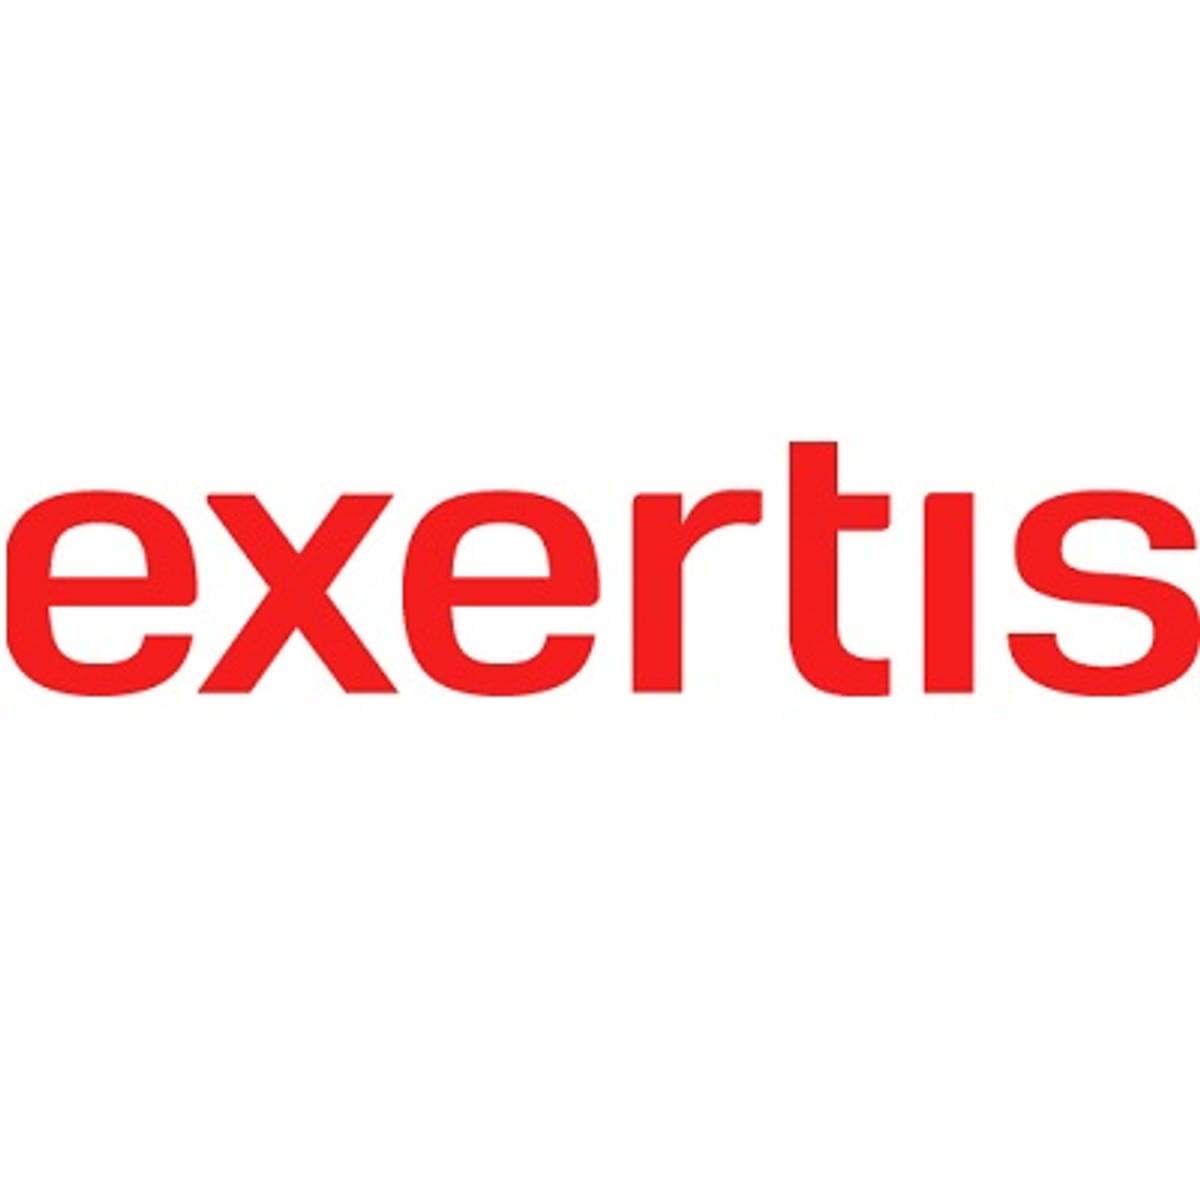 Hammer wordt hernoemd tot Exertis Enterprise image